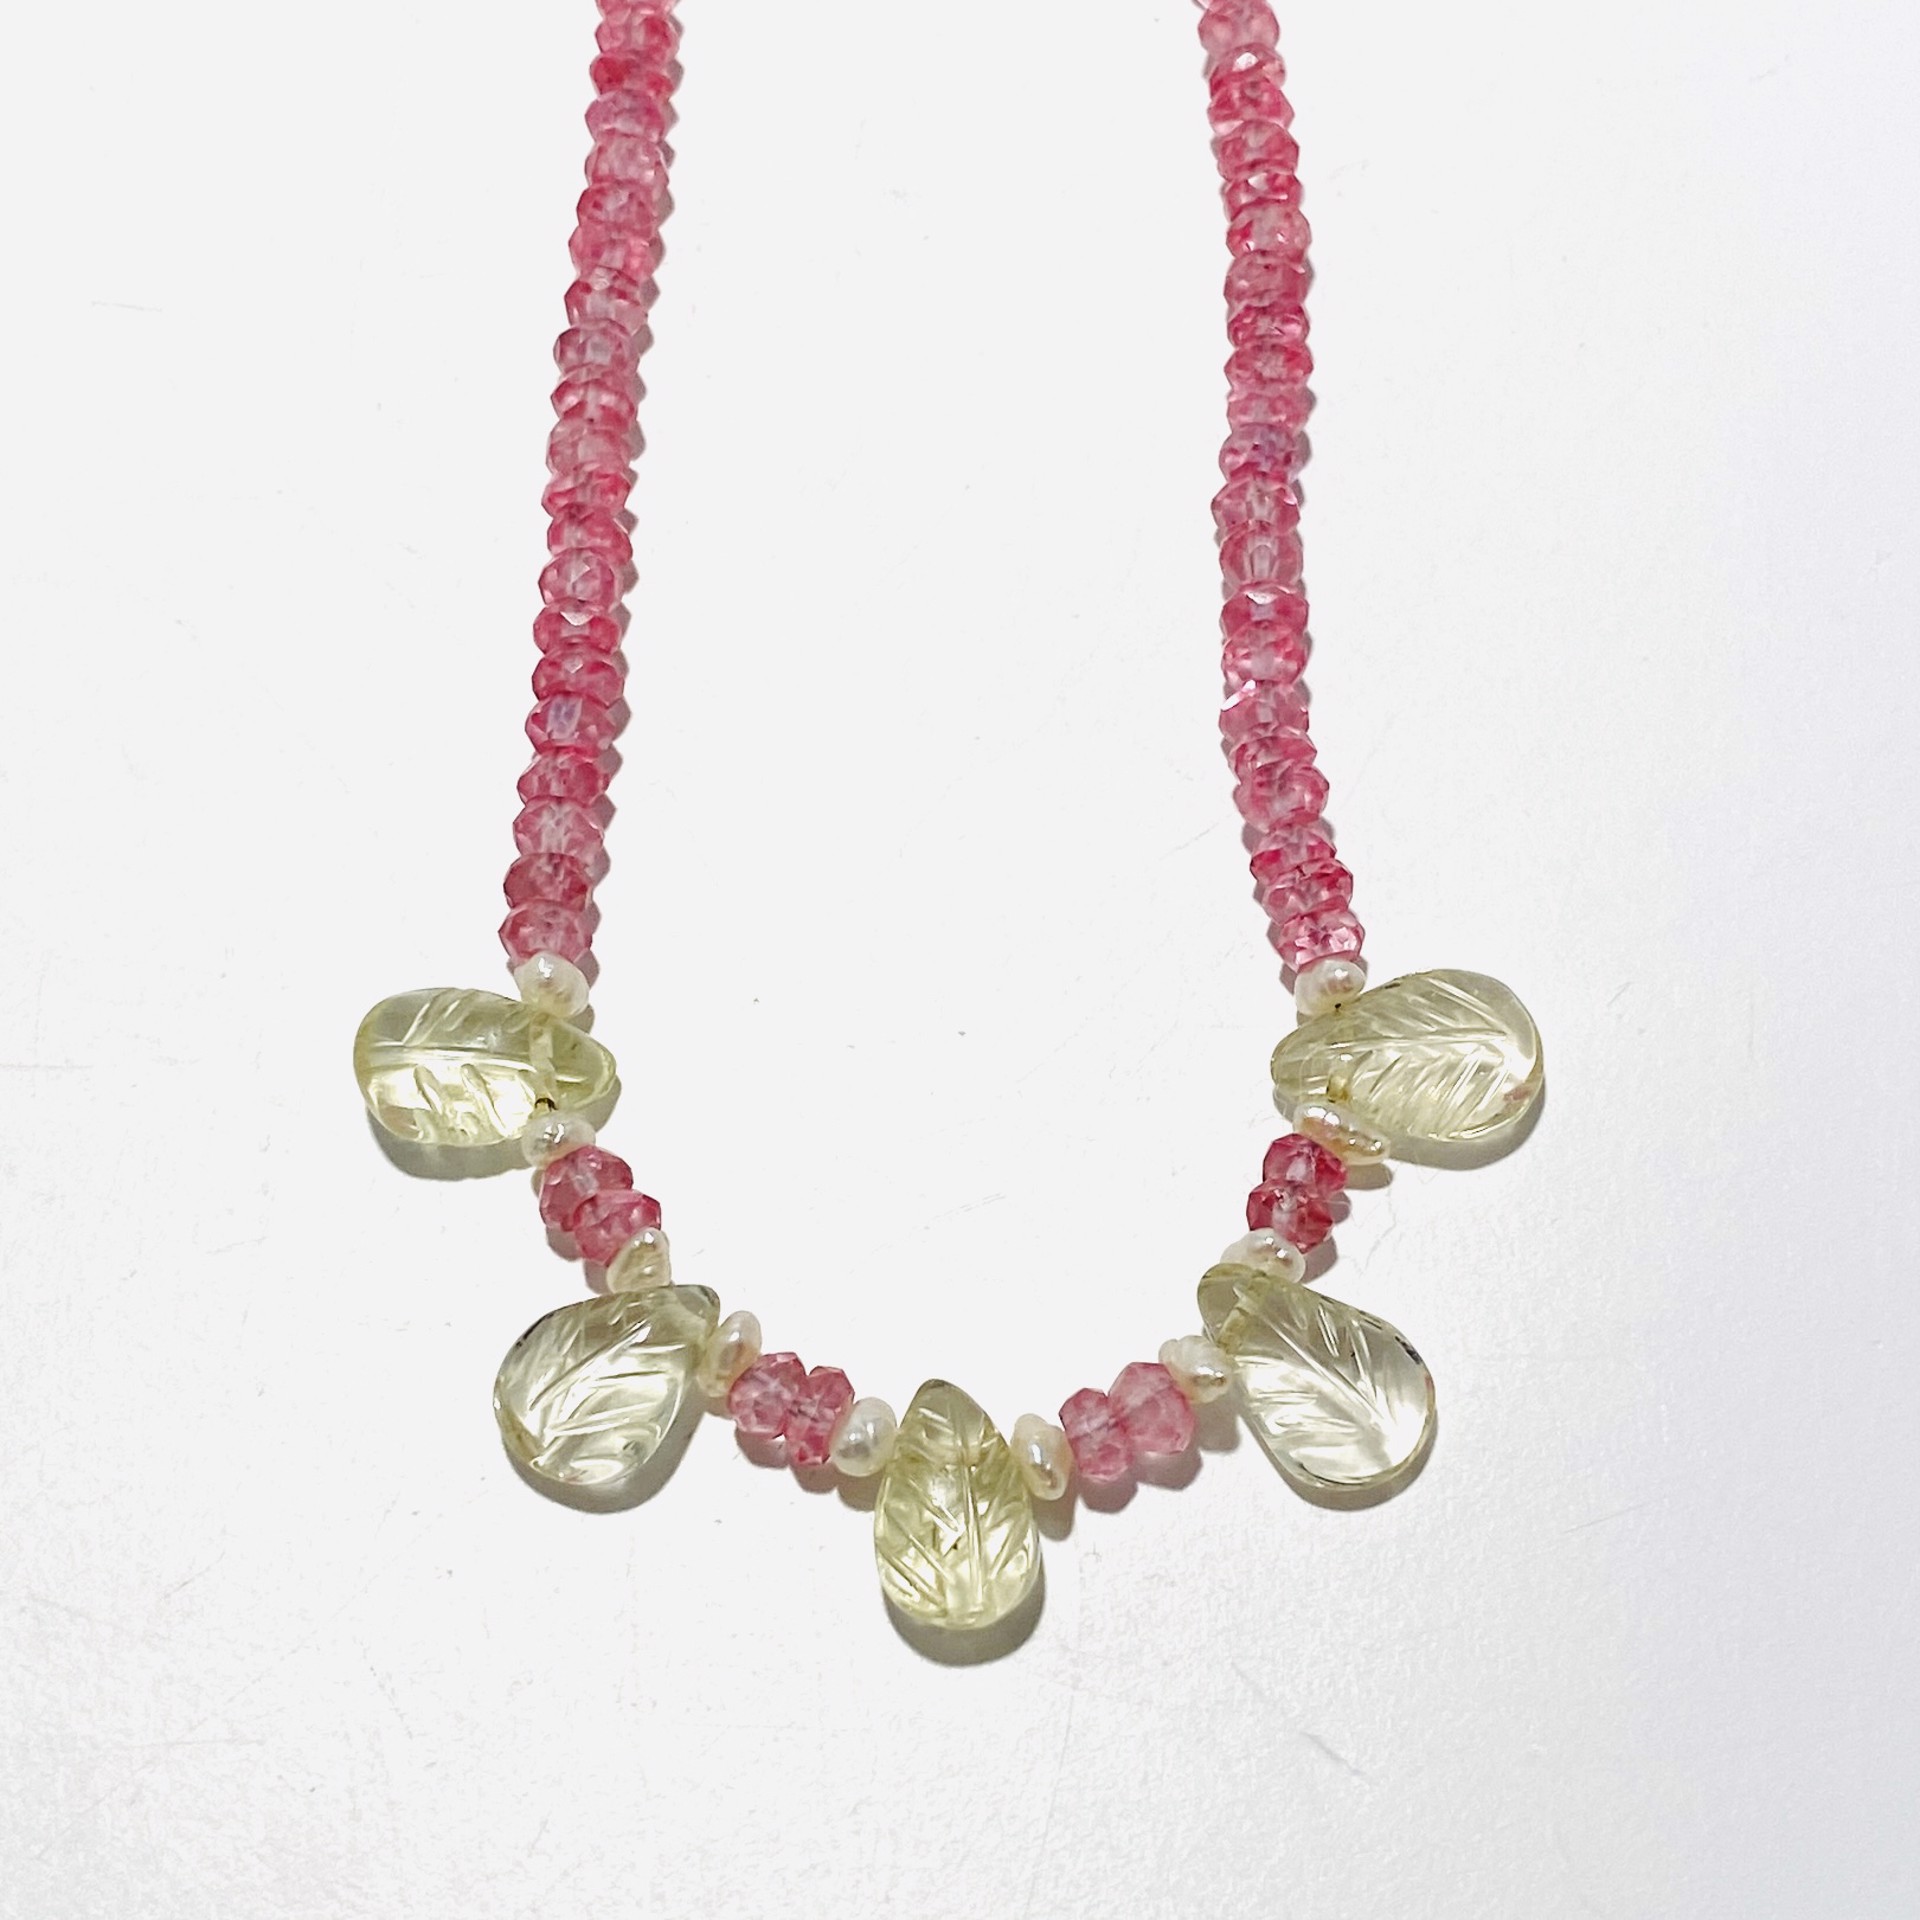 Pink Mystic Quartz and Carved Lemon Quartz Necklace by Nance Trueworthy